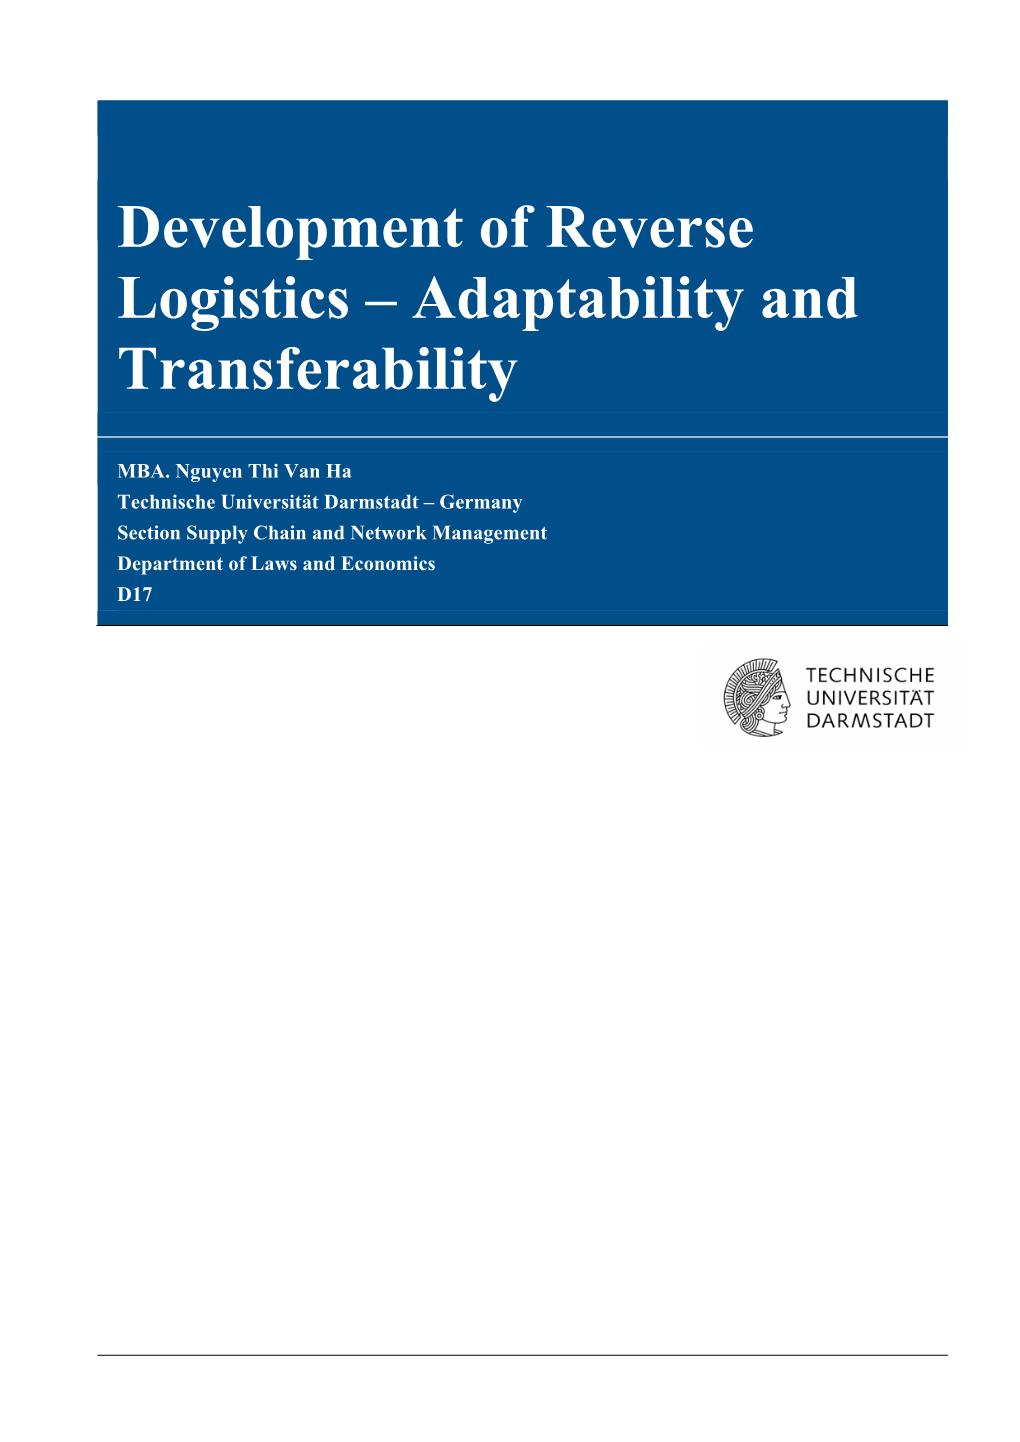 Development of Reverse Logistics – Adaptability and Transferability